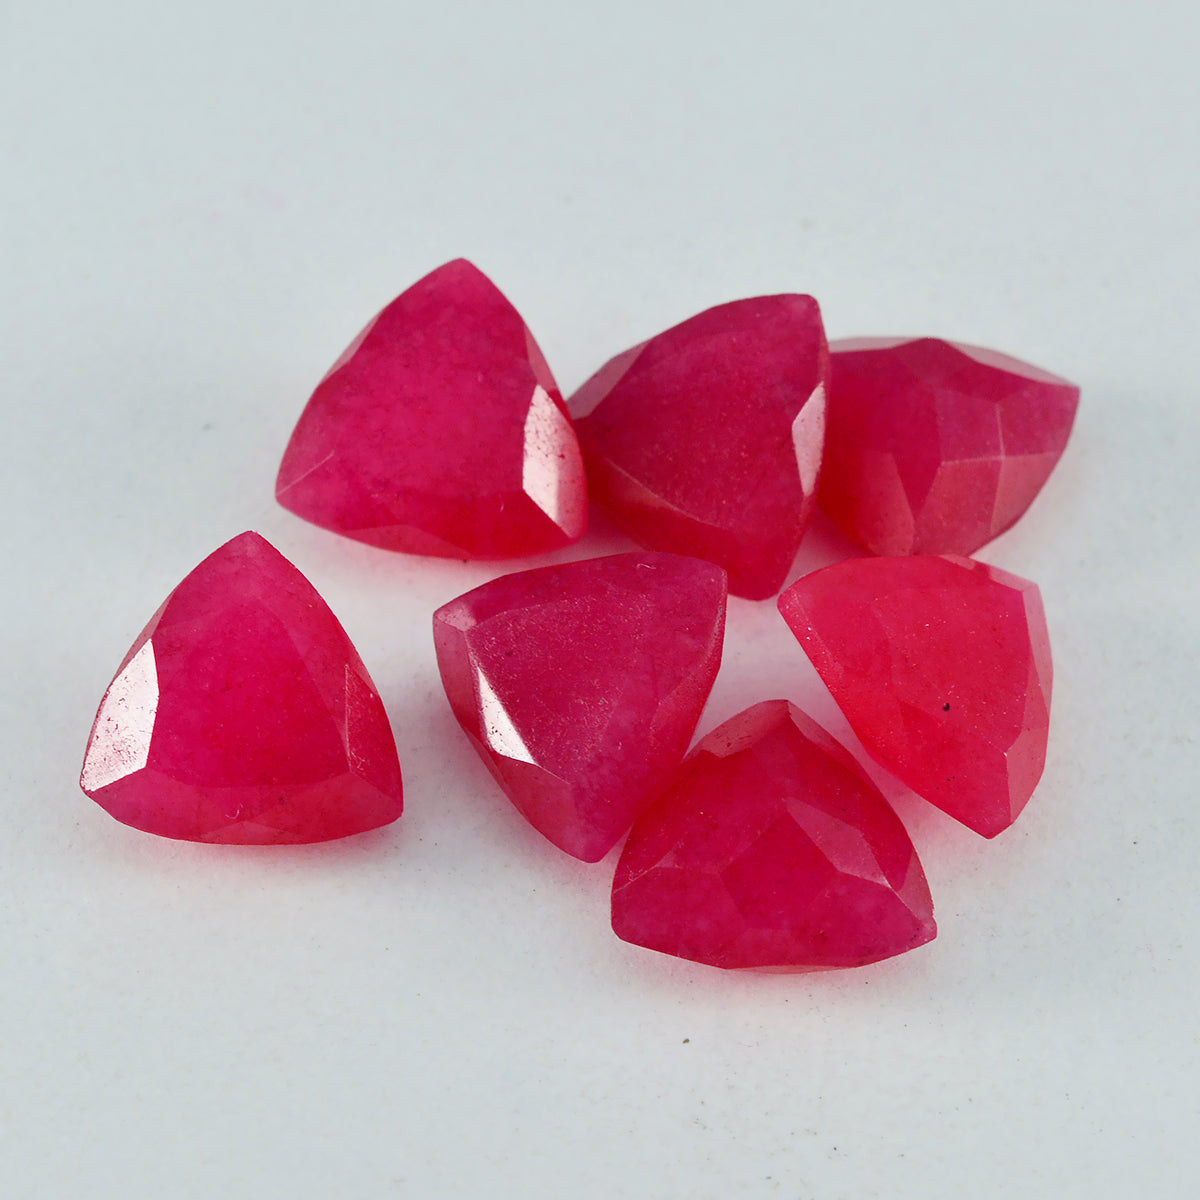 Riyogems 1PC Genuine Red Jasper Faceted 11x11 mm Trillion Shape sweet Quality Loose Gems